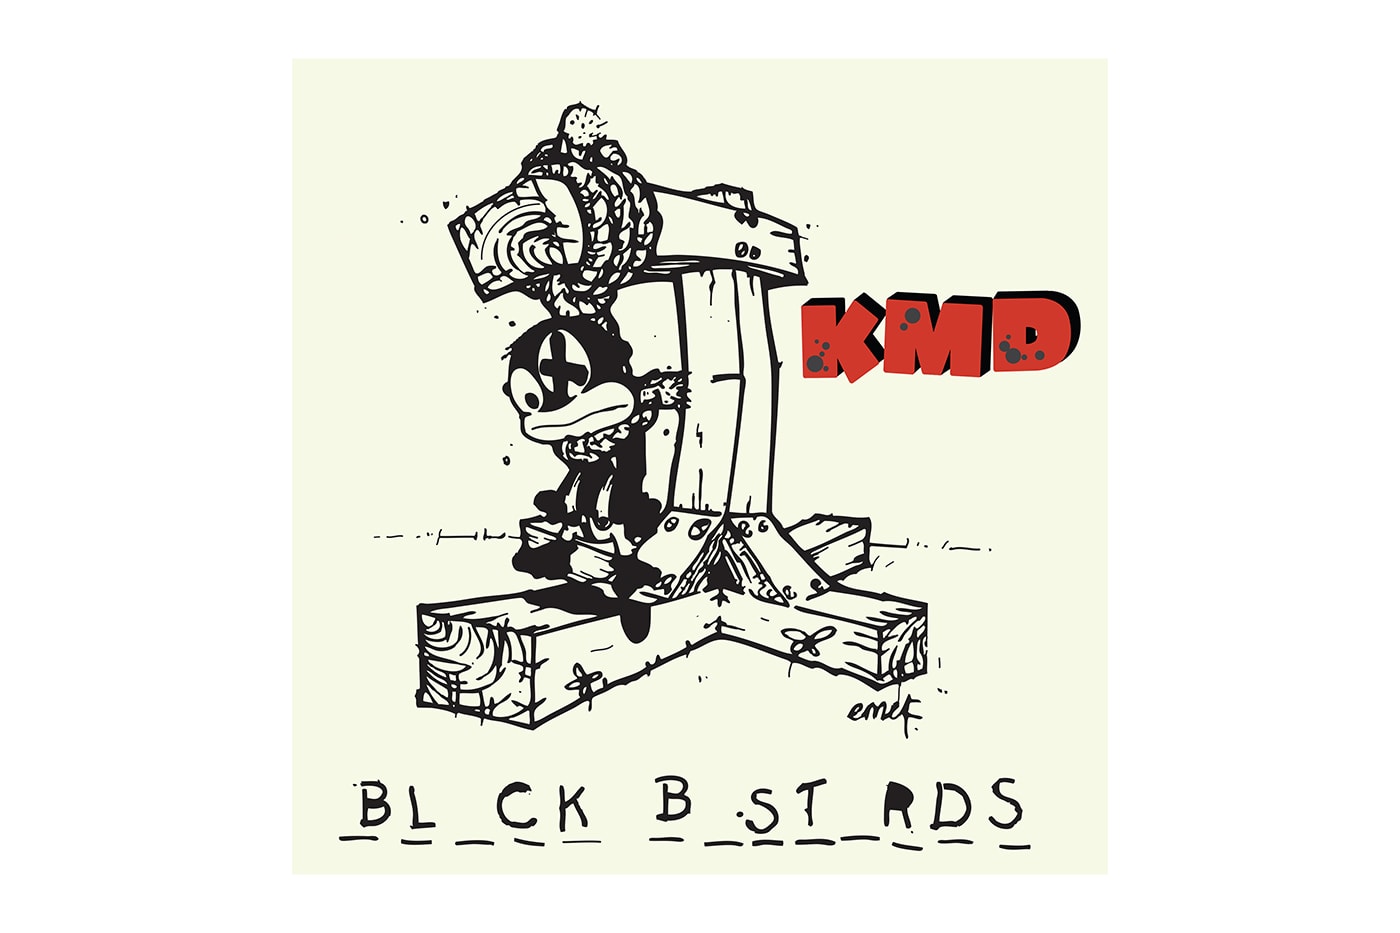 mf doom metal face records KMD Black Bastards 30th Anniversary deluxe Vinyl release info